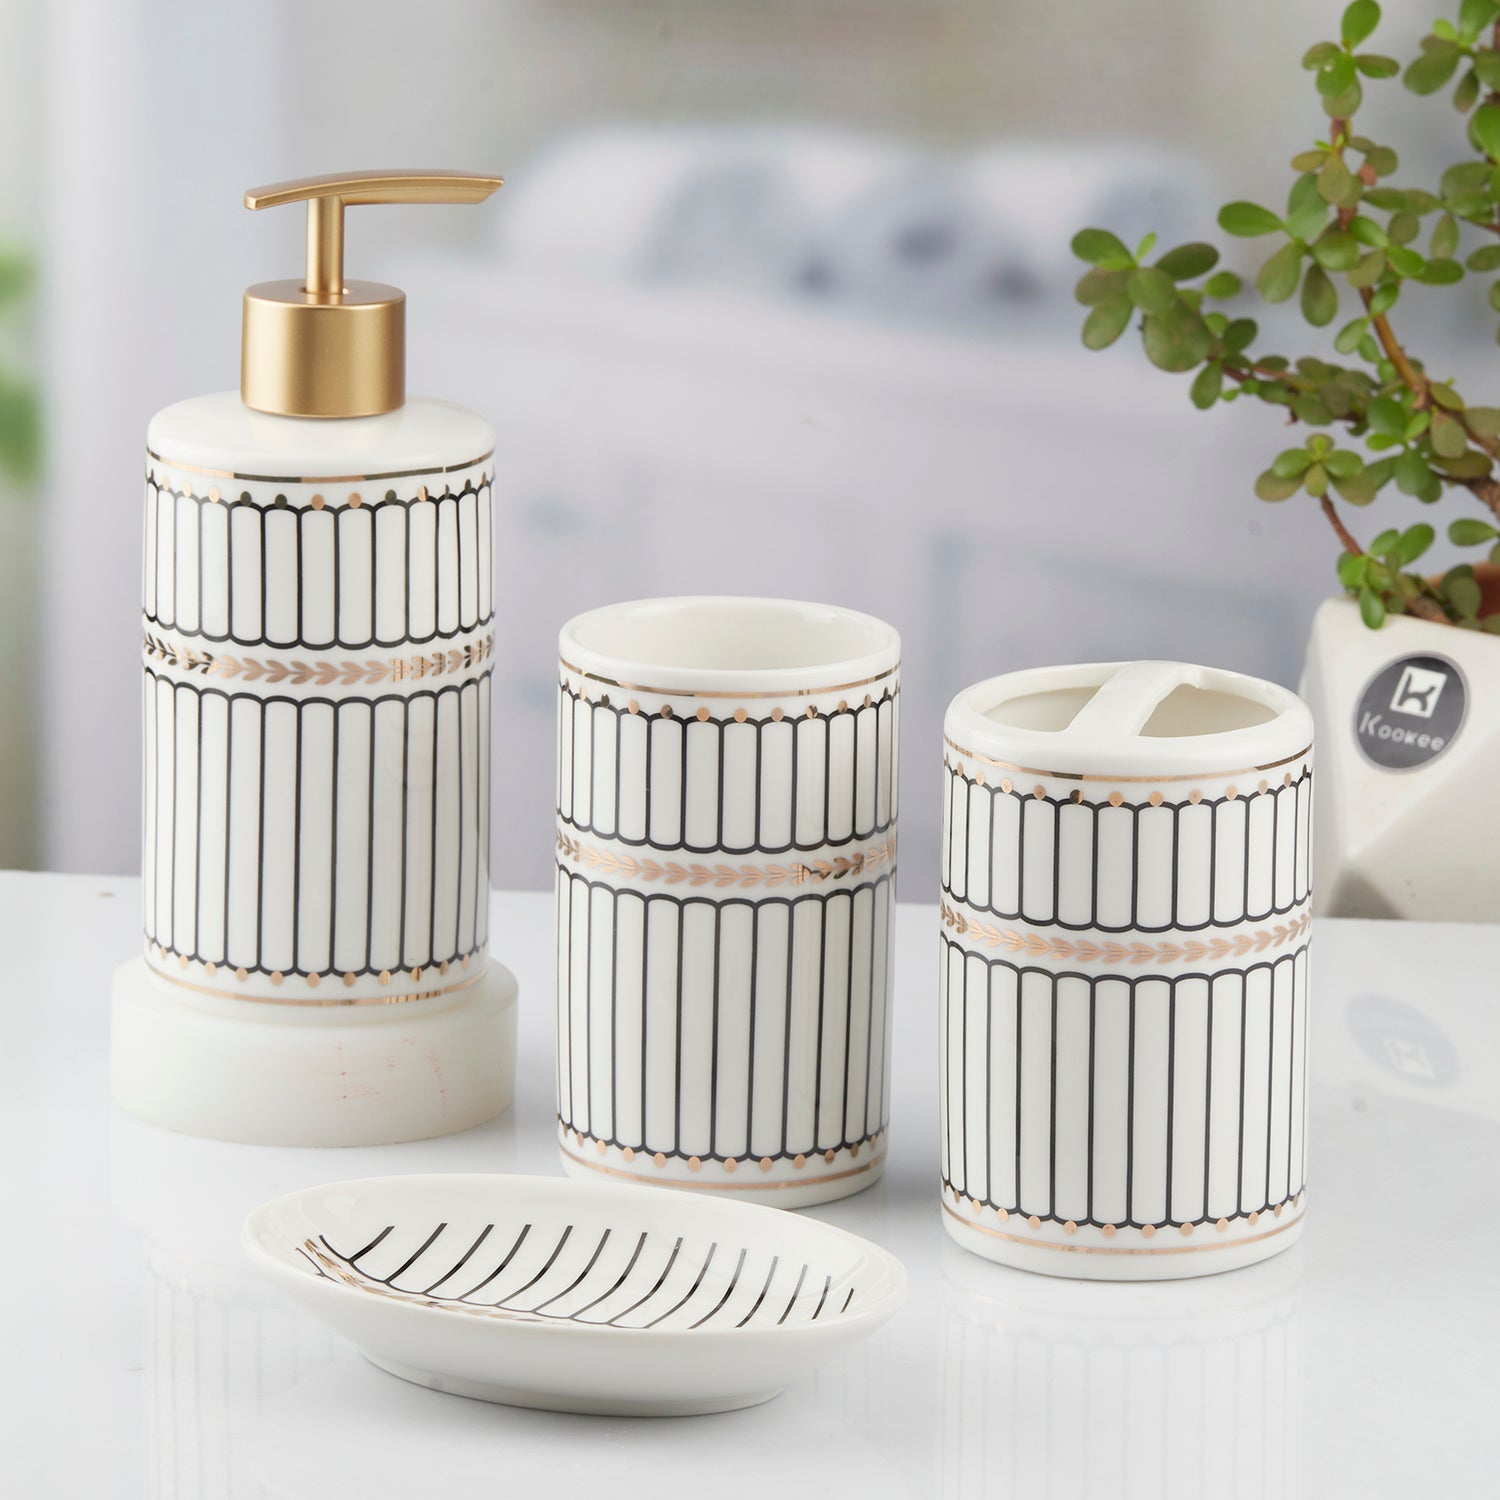 Ceramic Bathroom Accessories Set of 4 Bath Set with Soap Dispenser (9741)